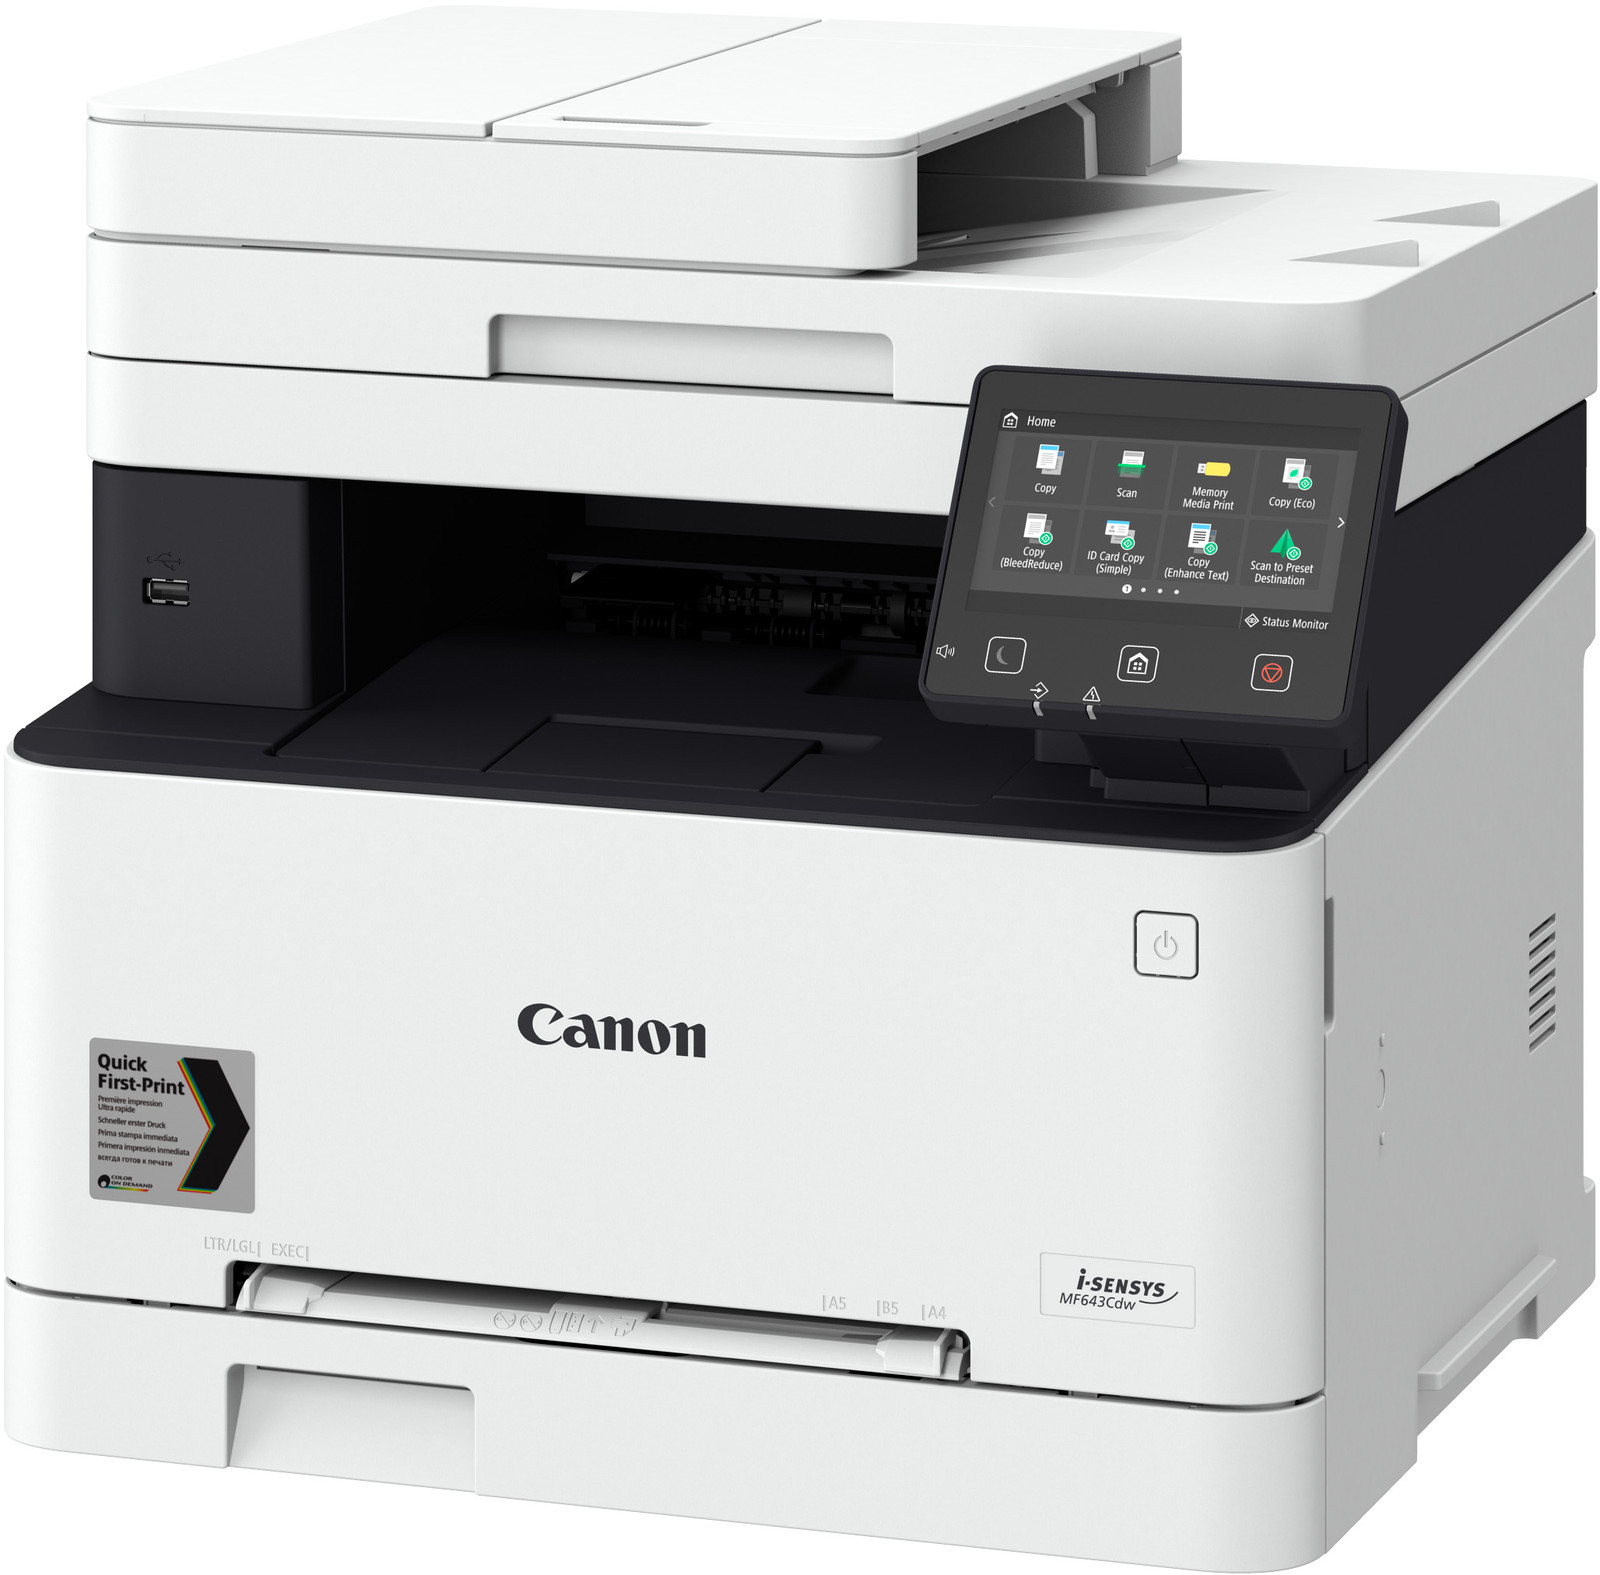 CANON I-Sensys MF 643 CDW, Multifunktionsdrucker, Weiß | eBay